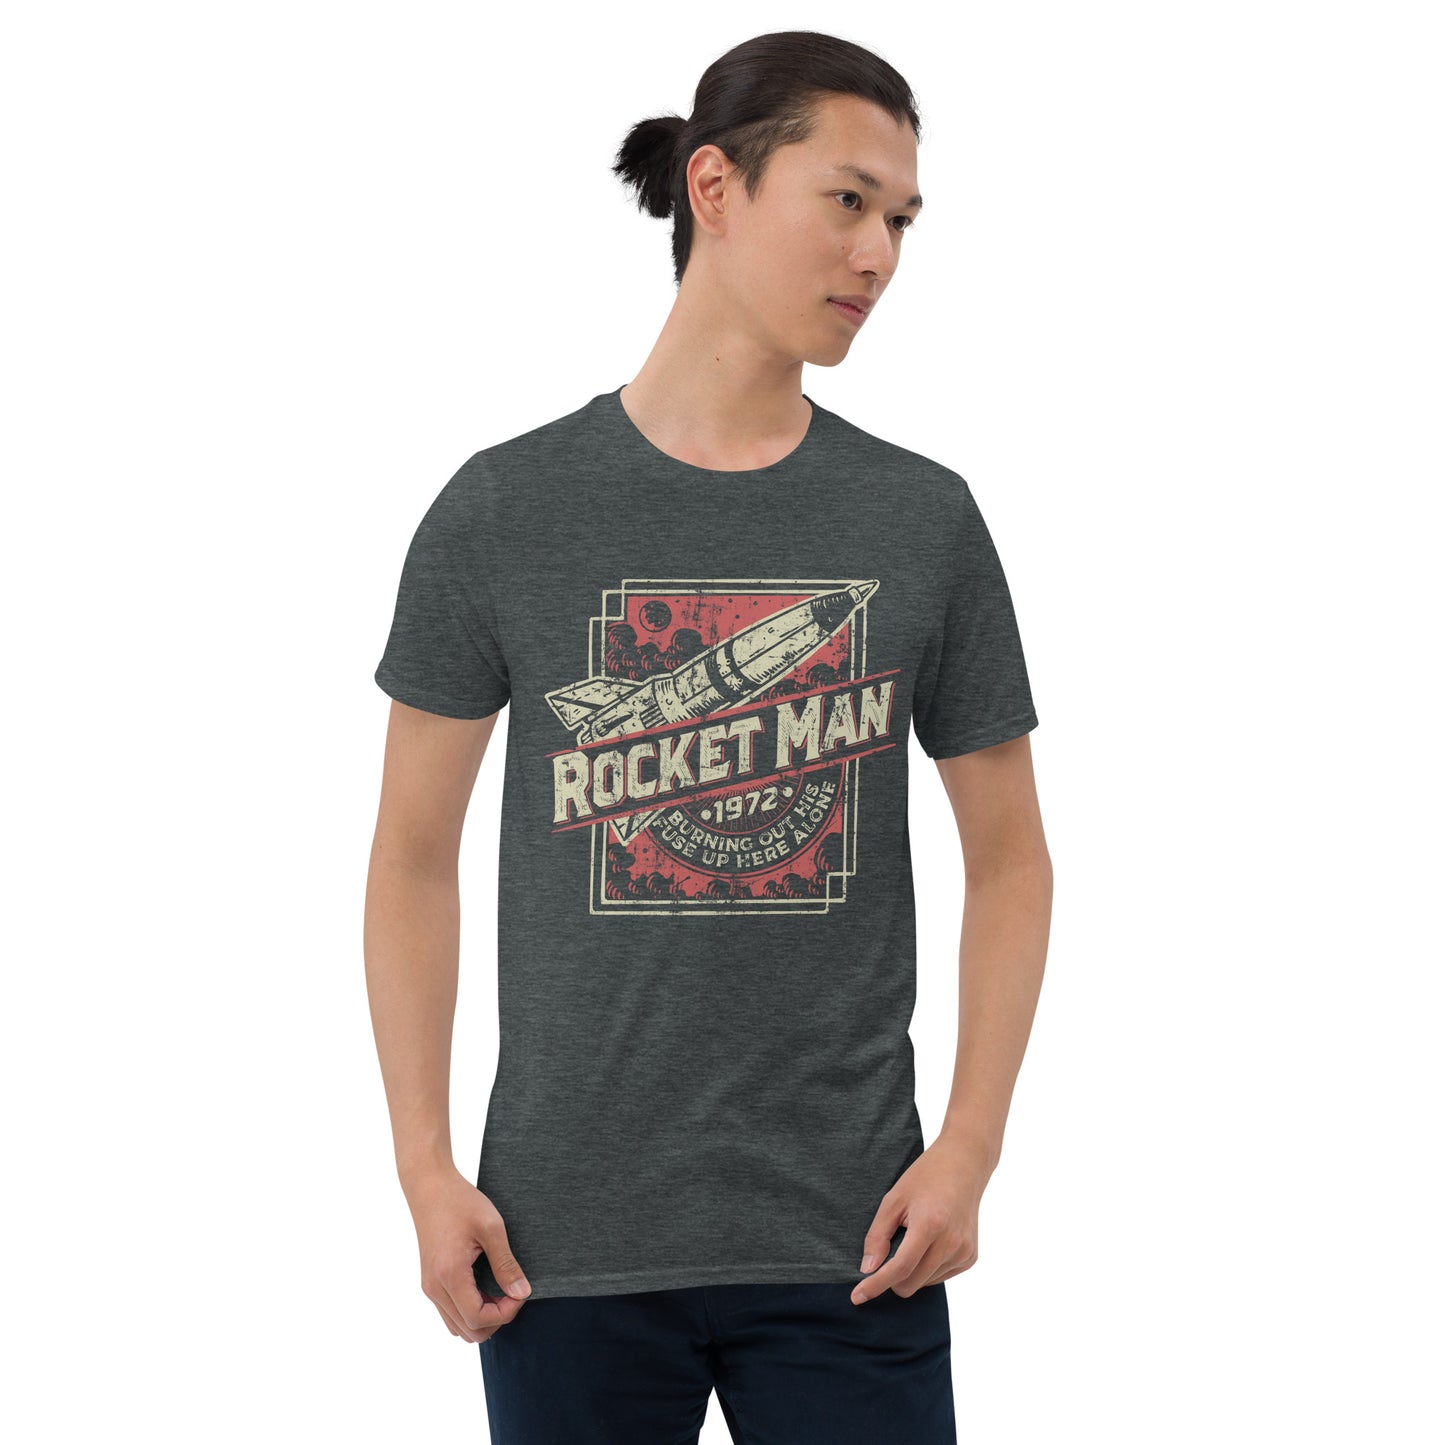 Rocket Man - Men's T-shirt